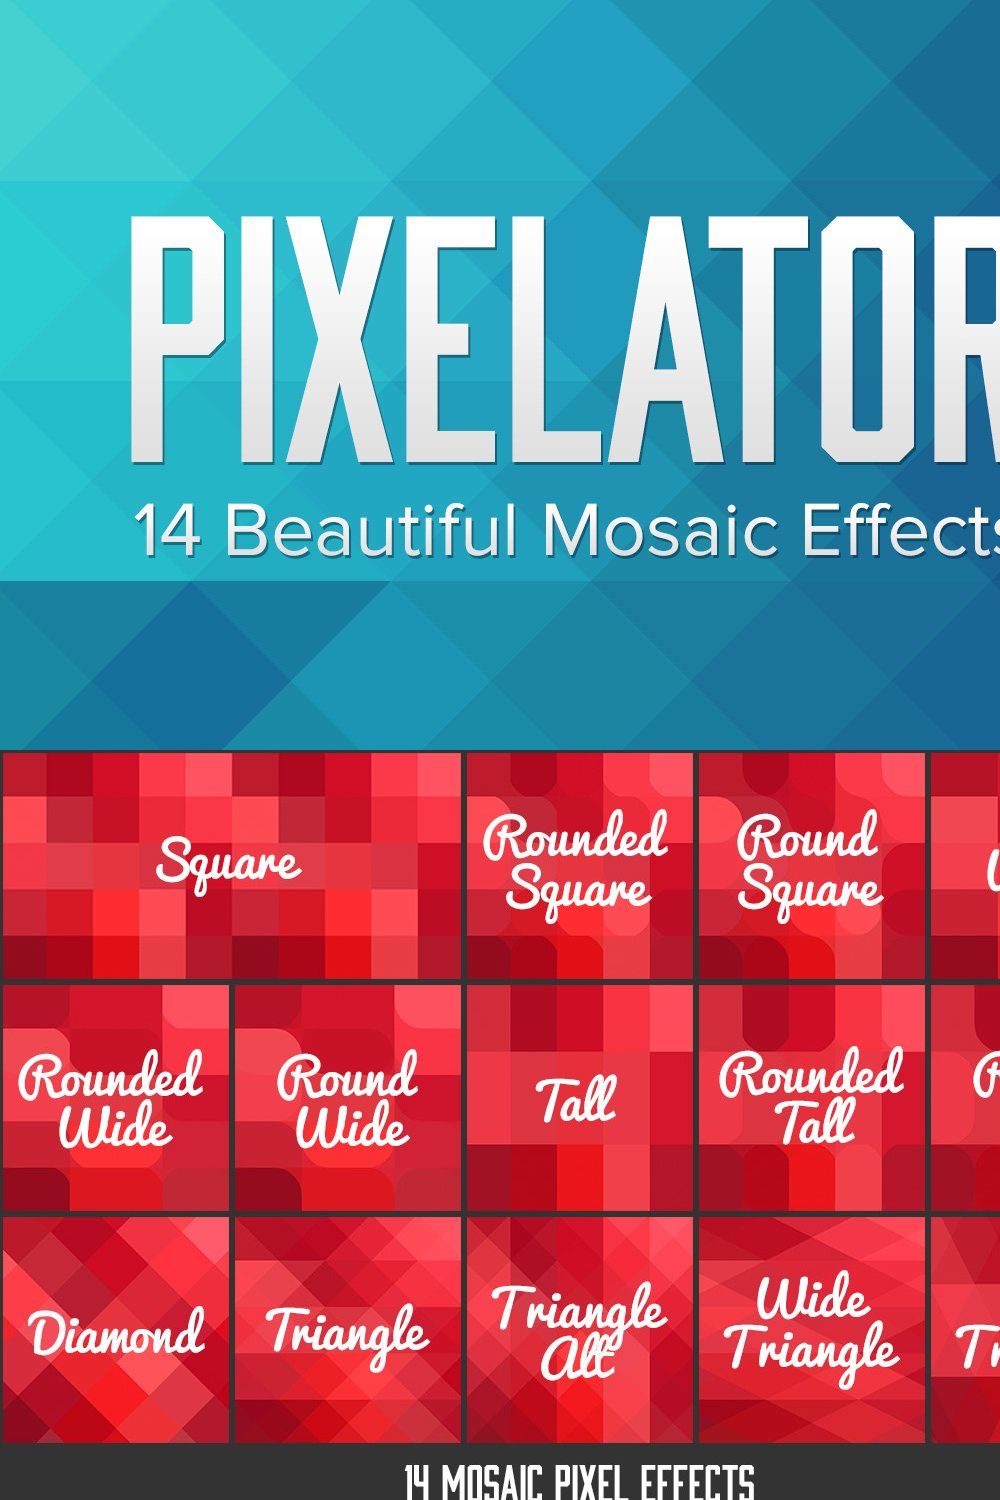 Pixelator - 14 Mosaic Pixel Effects pinterest preview image.